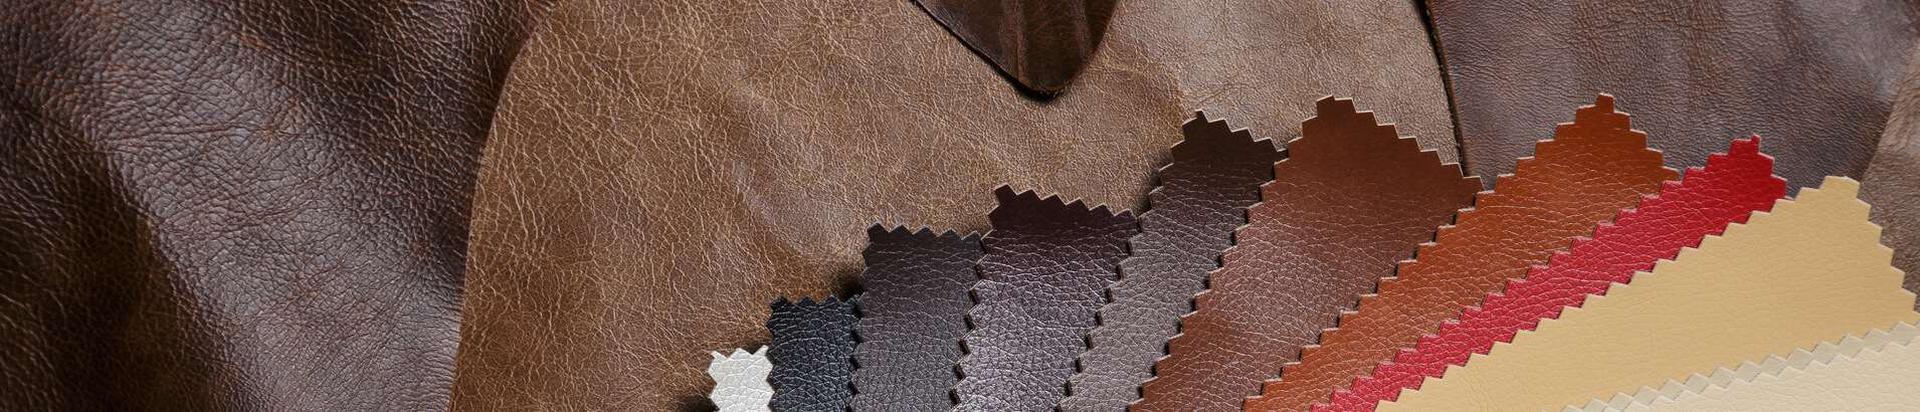 leather, Car seats, Car seats upholstery, Leather sale, Alcantara fabric